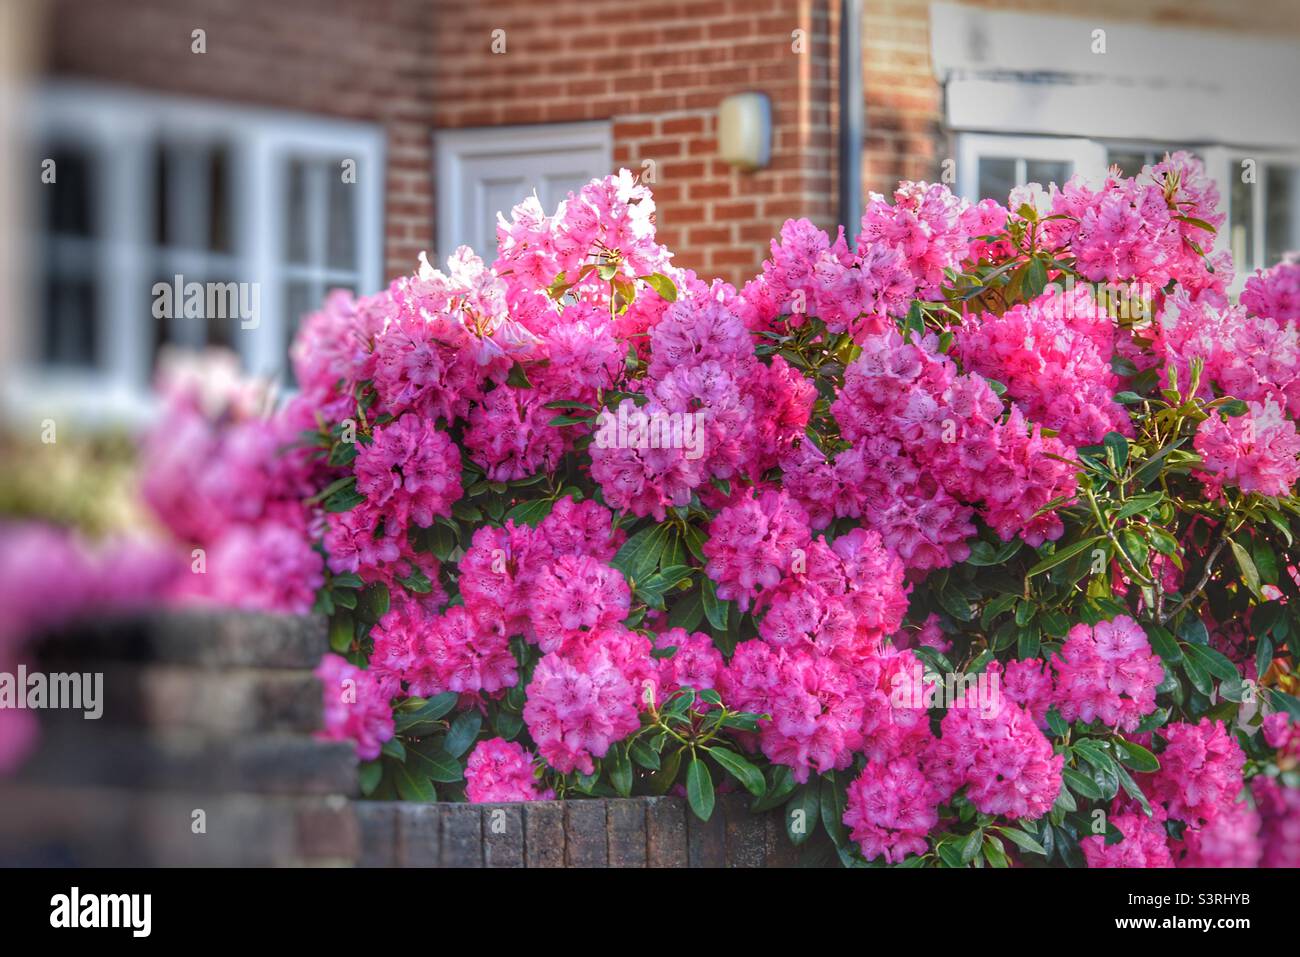 Rhododendron bush Stock Photo